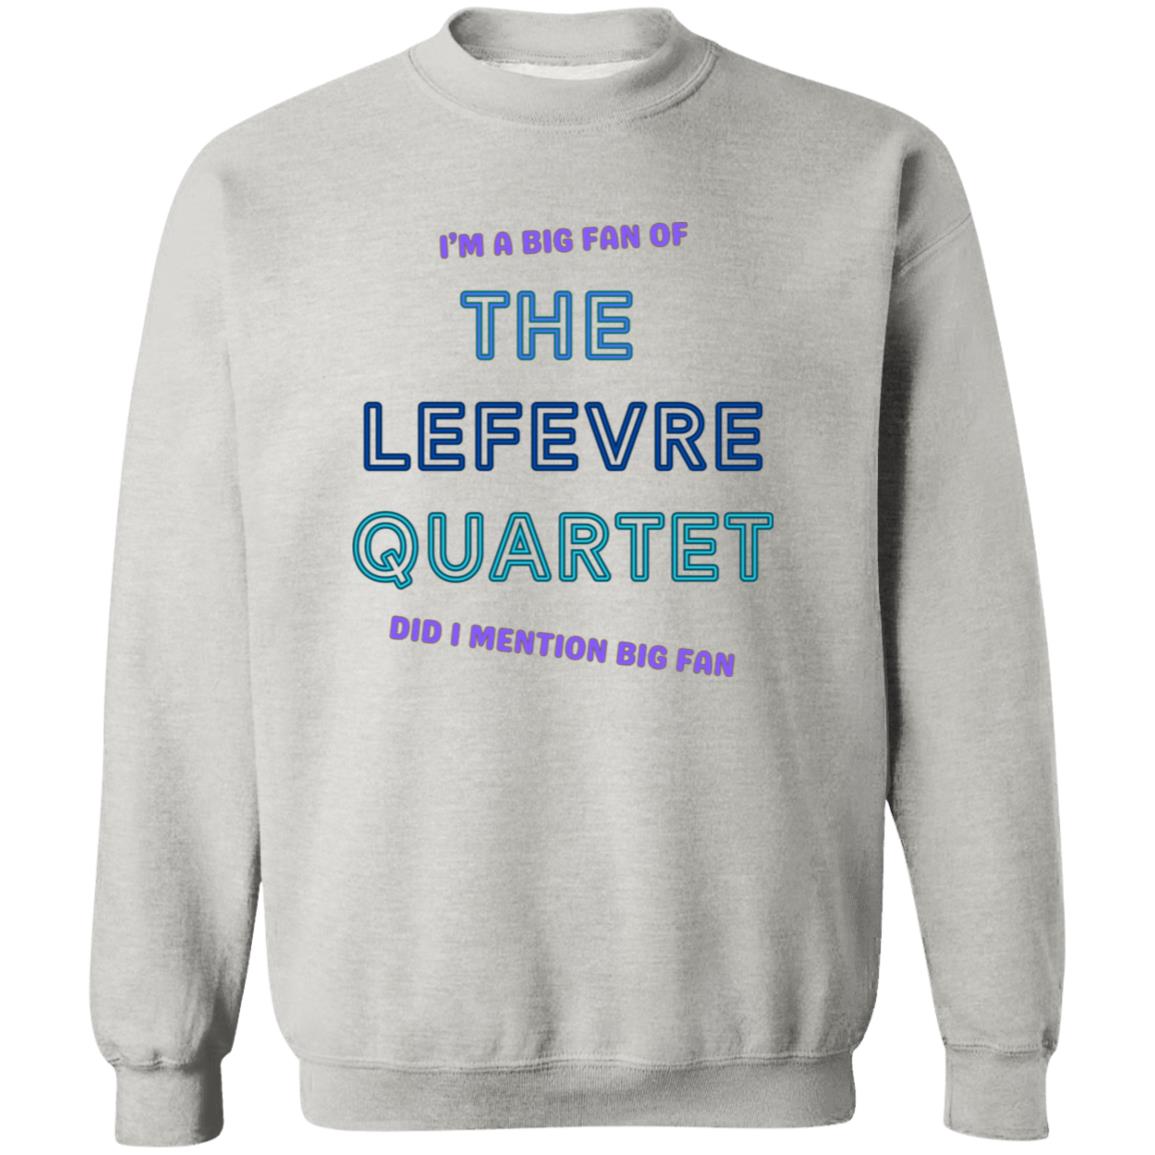 LeFevre Quartet Big Fan Crewneck Pullover Sweatshirt